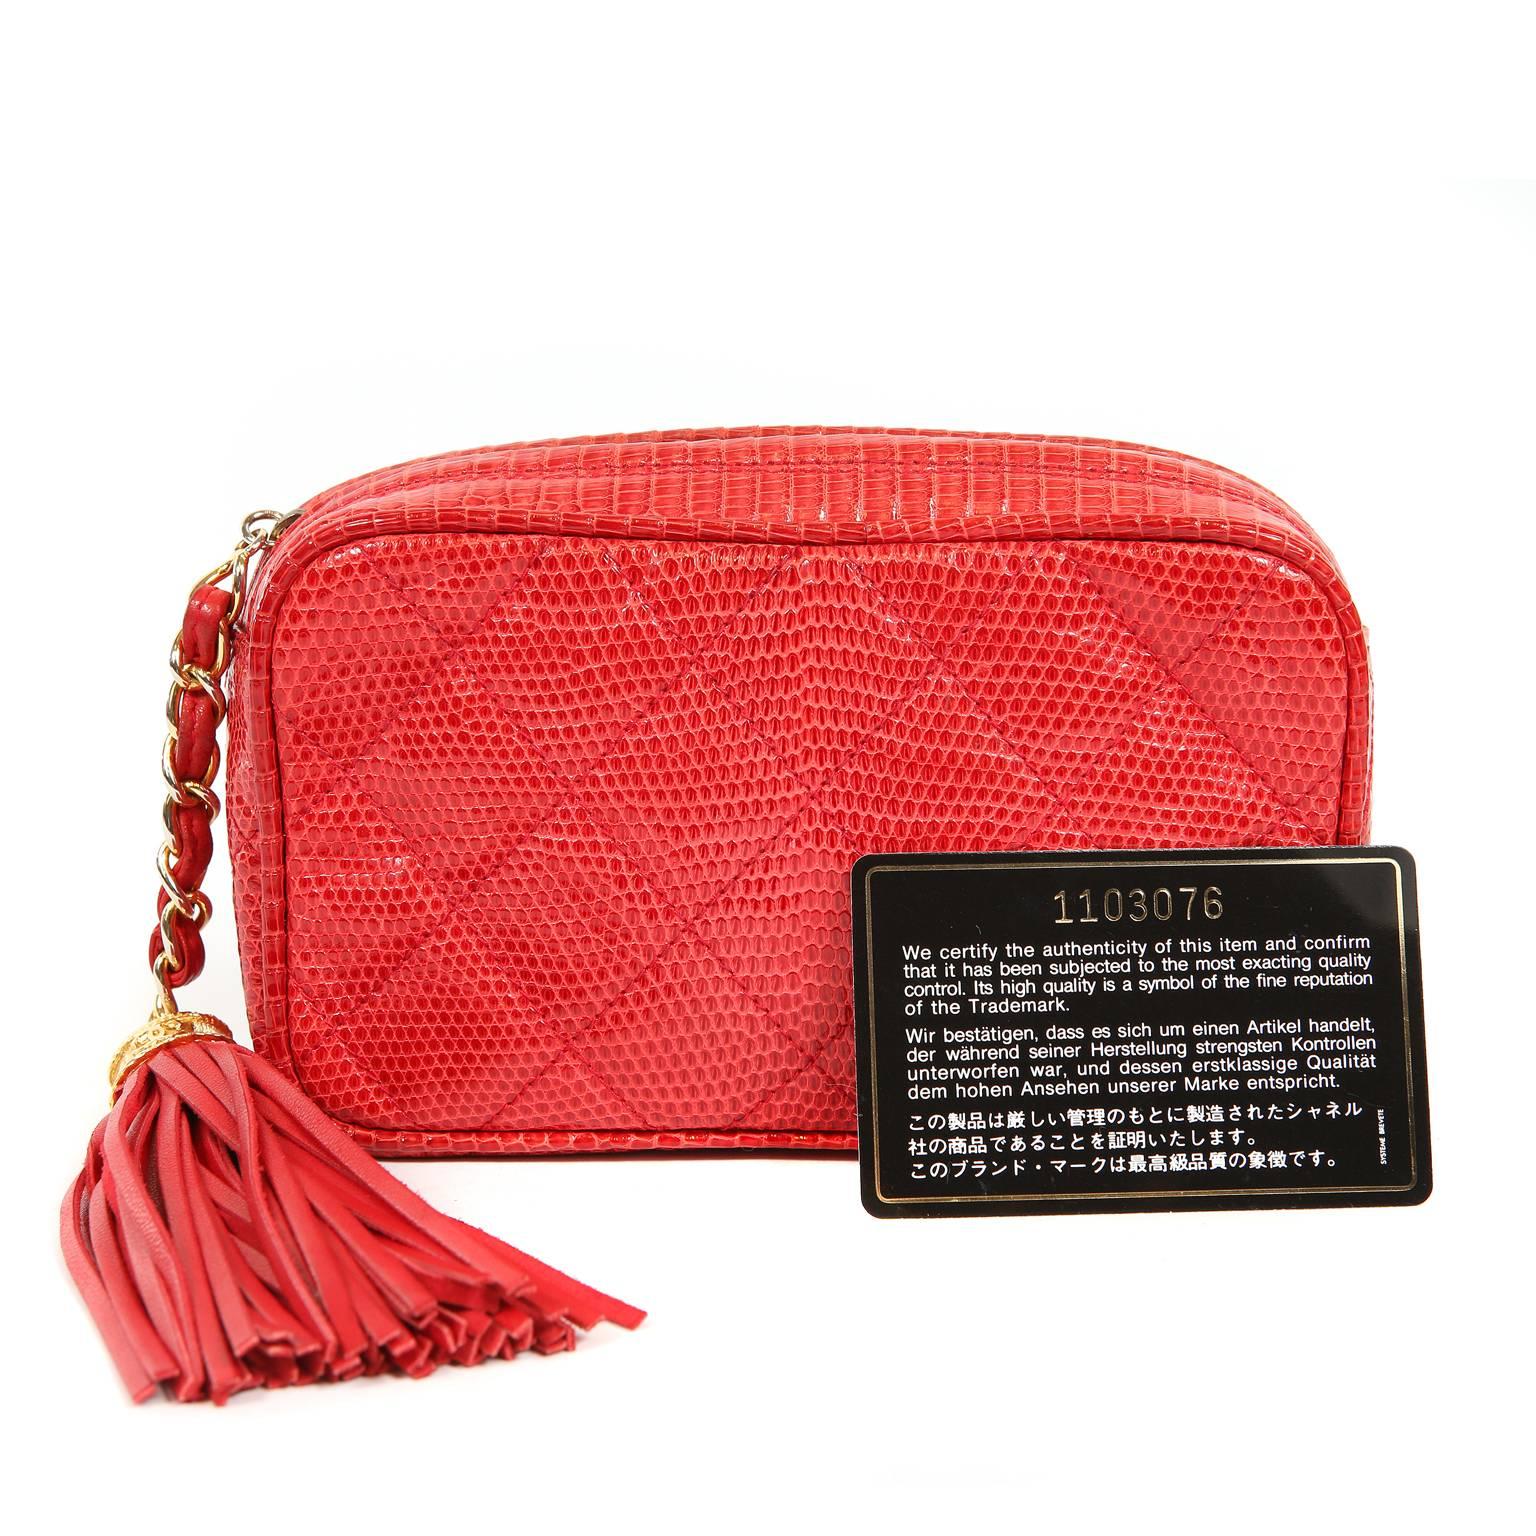 Chanel Red Lizard Vintage Tassel Clutch For Sale 7